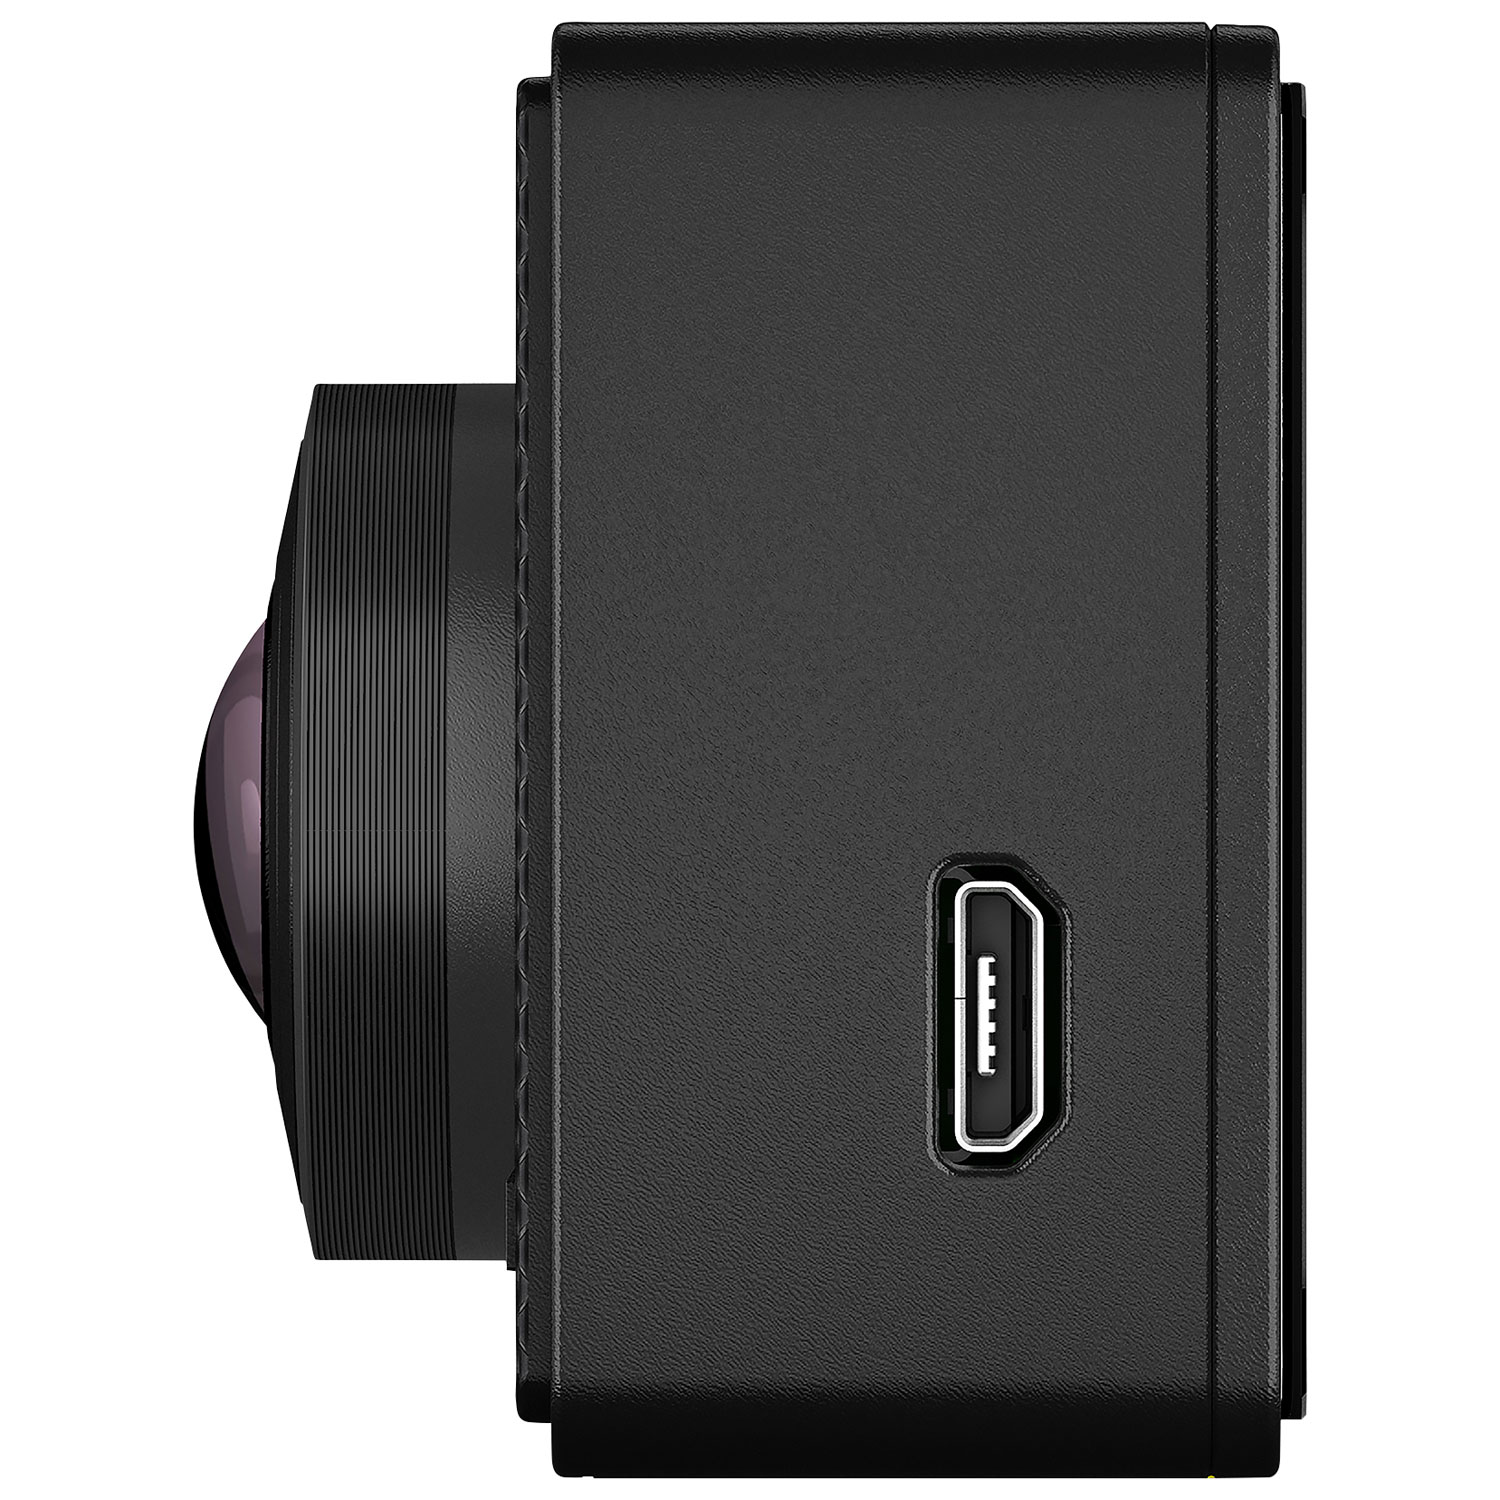 Garmin Dash Cam 67W 1440p 180° FOV Voice Control Compact and Discreet